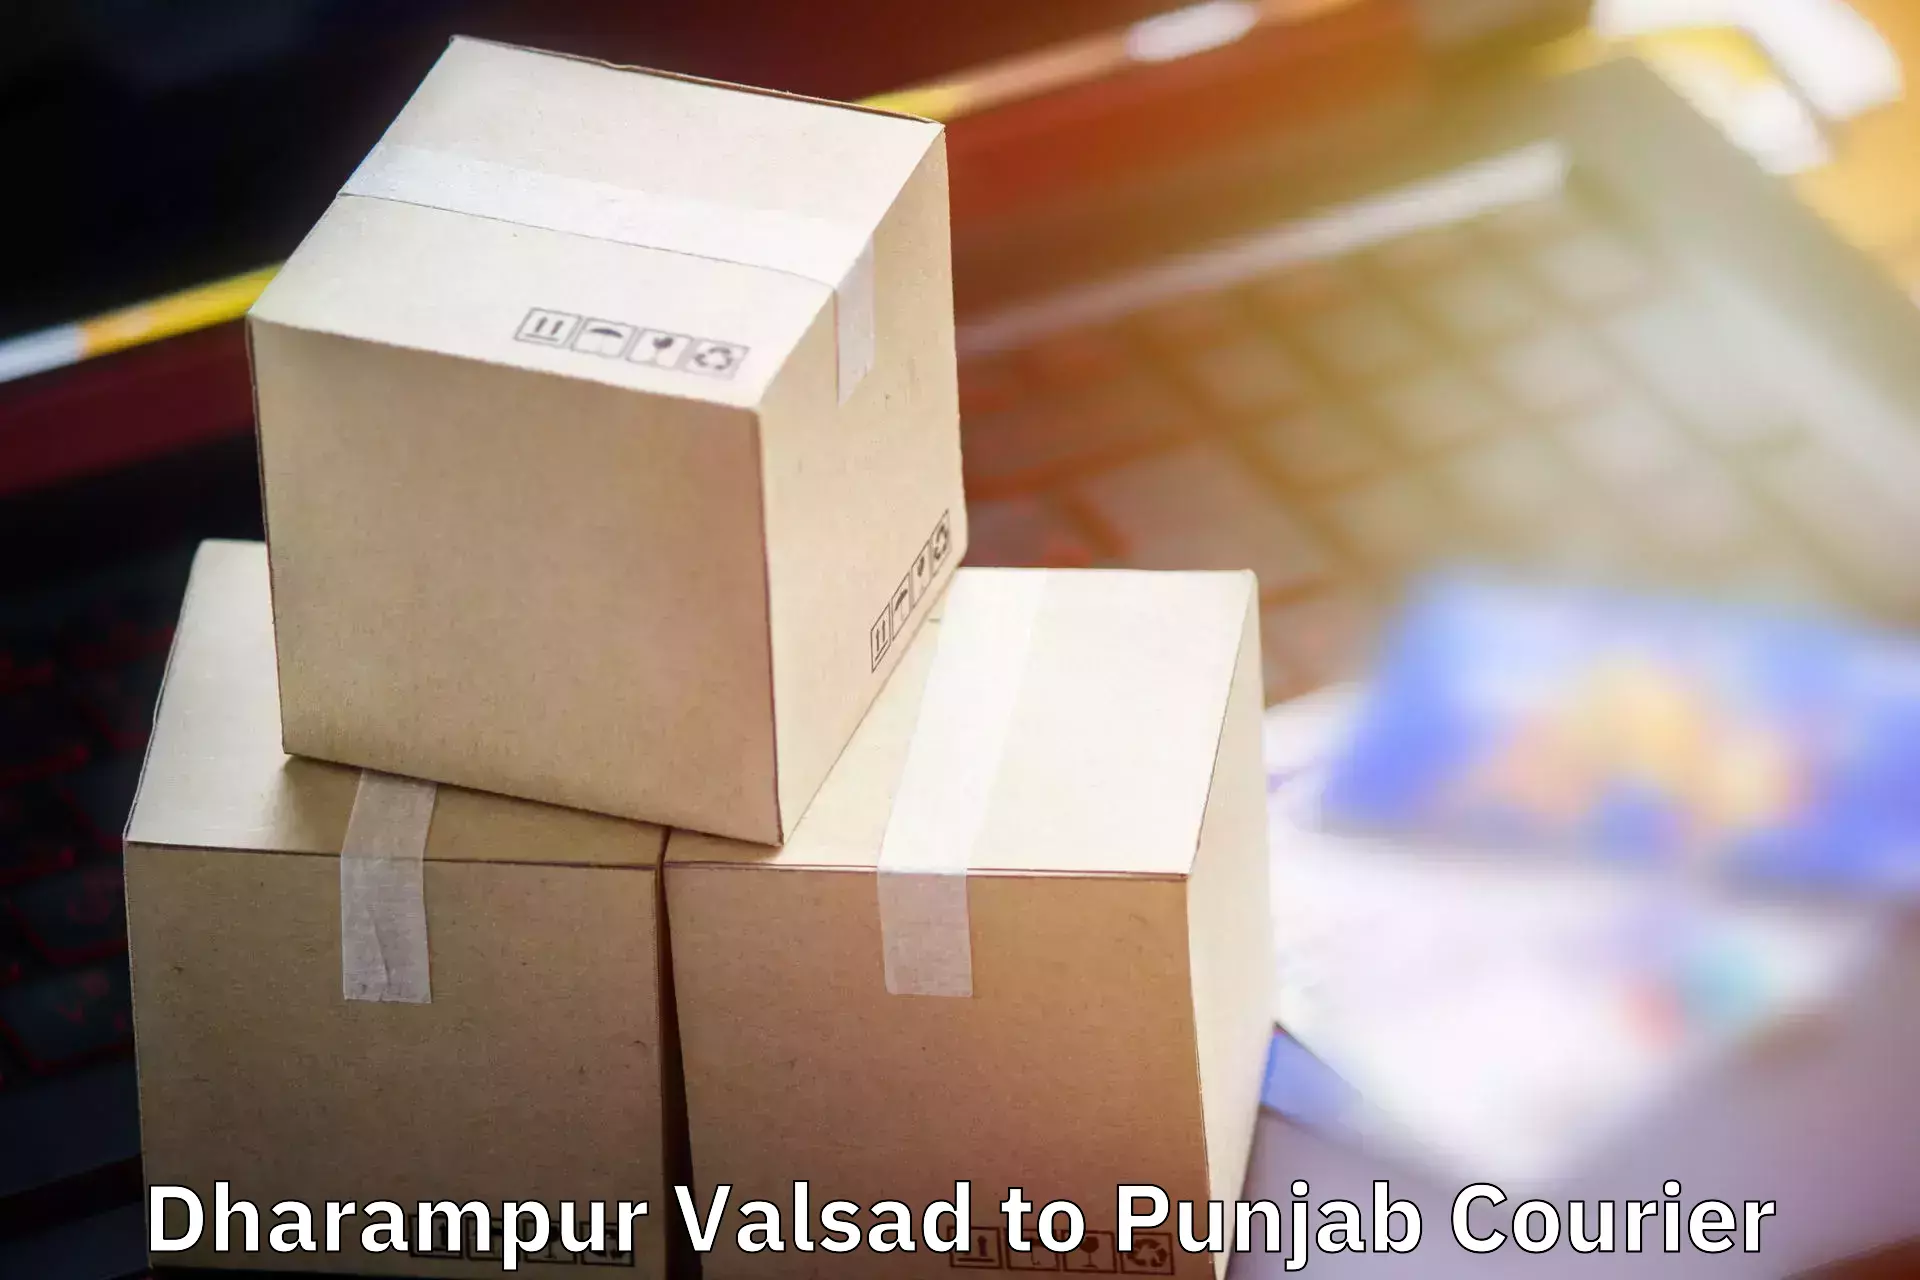 Luggage transport service Dharampur Valsad to Punjab